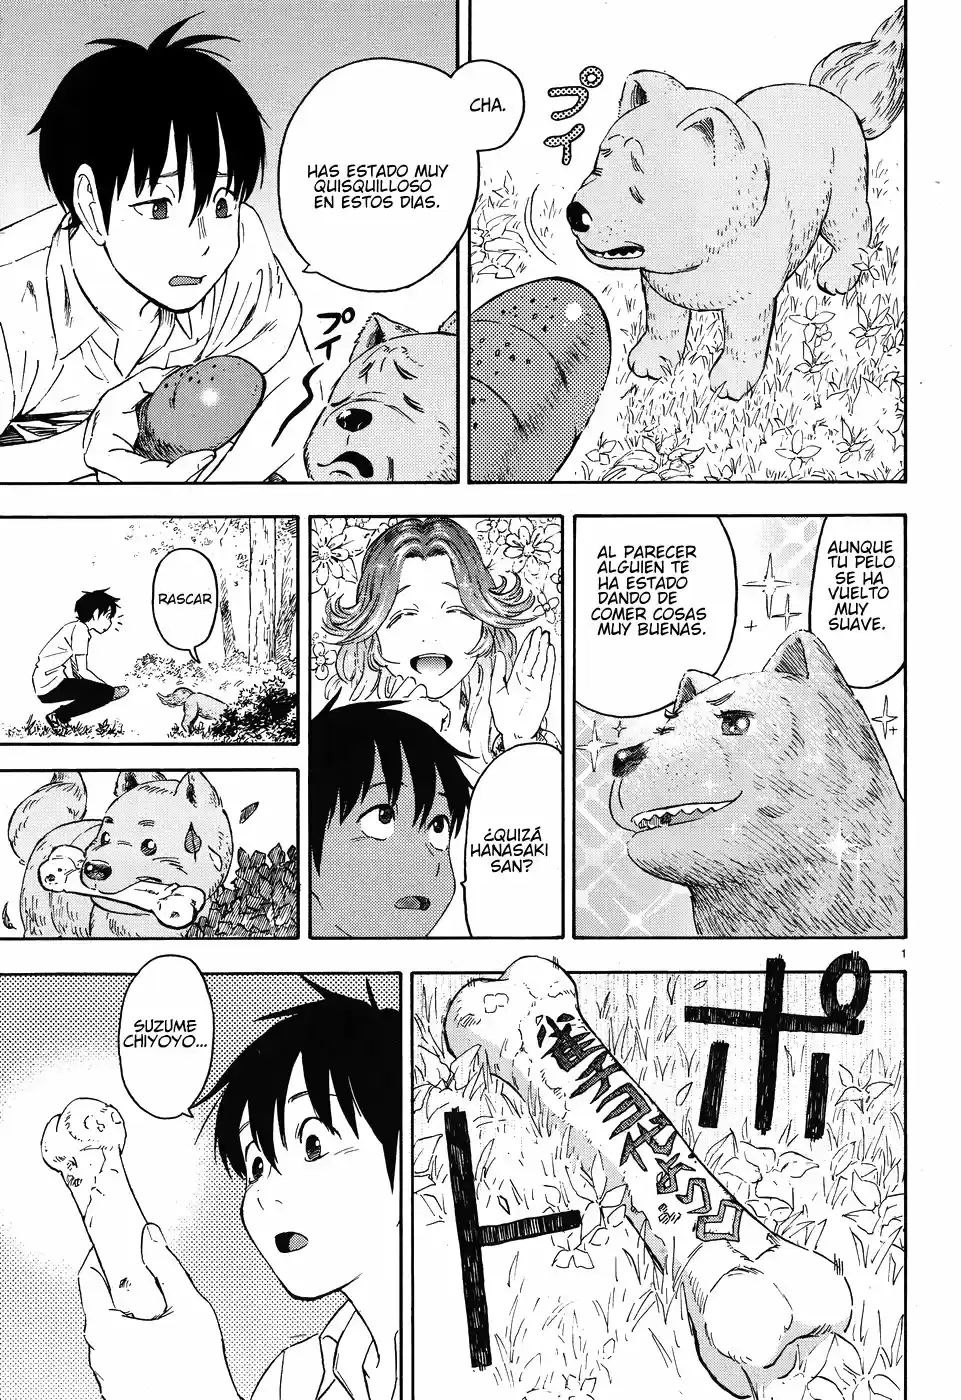 Shinobuna! Chiyo-chan: Chapter 7 - Page 1